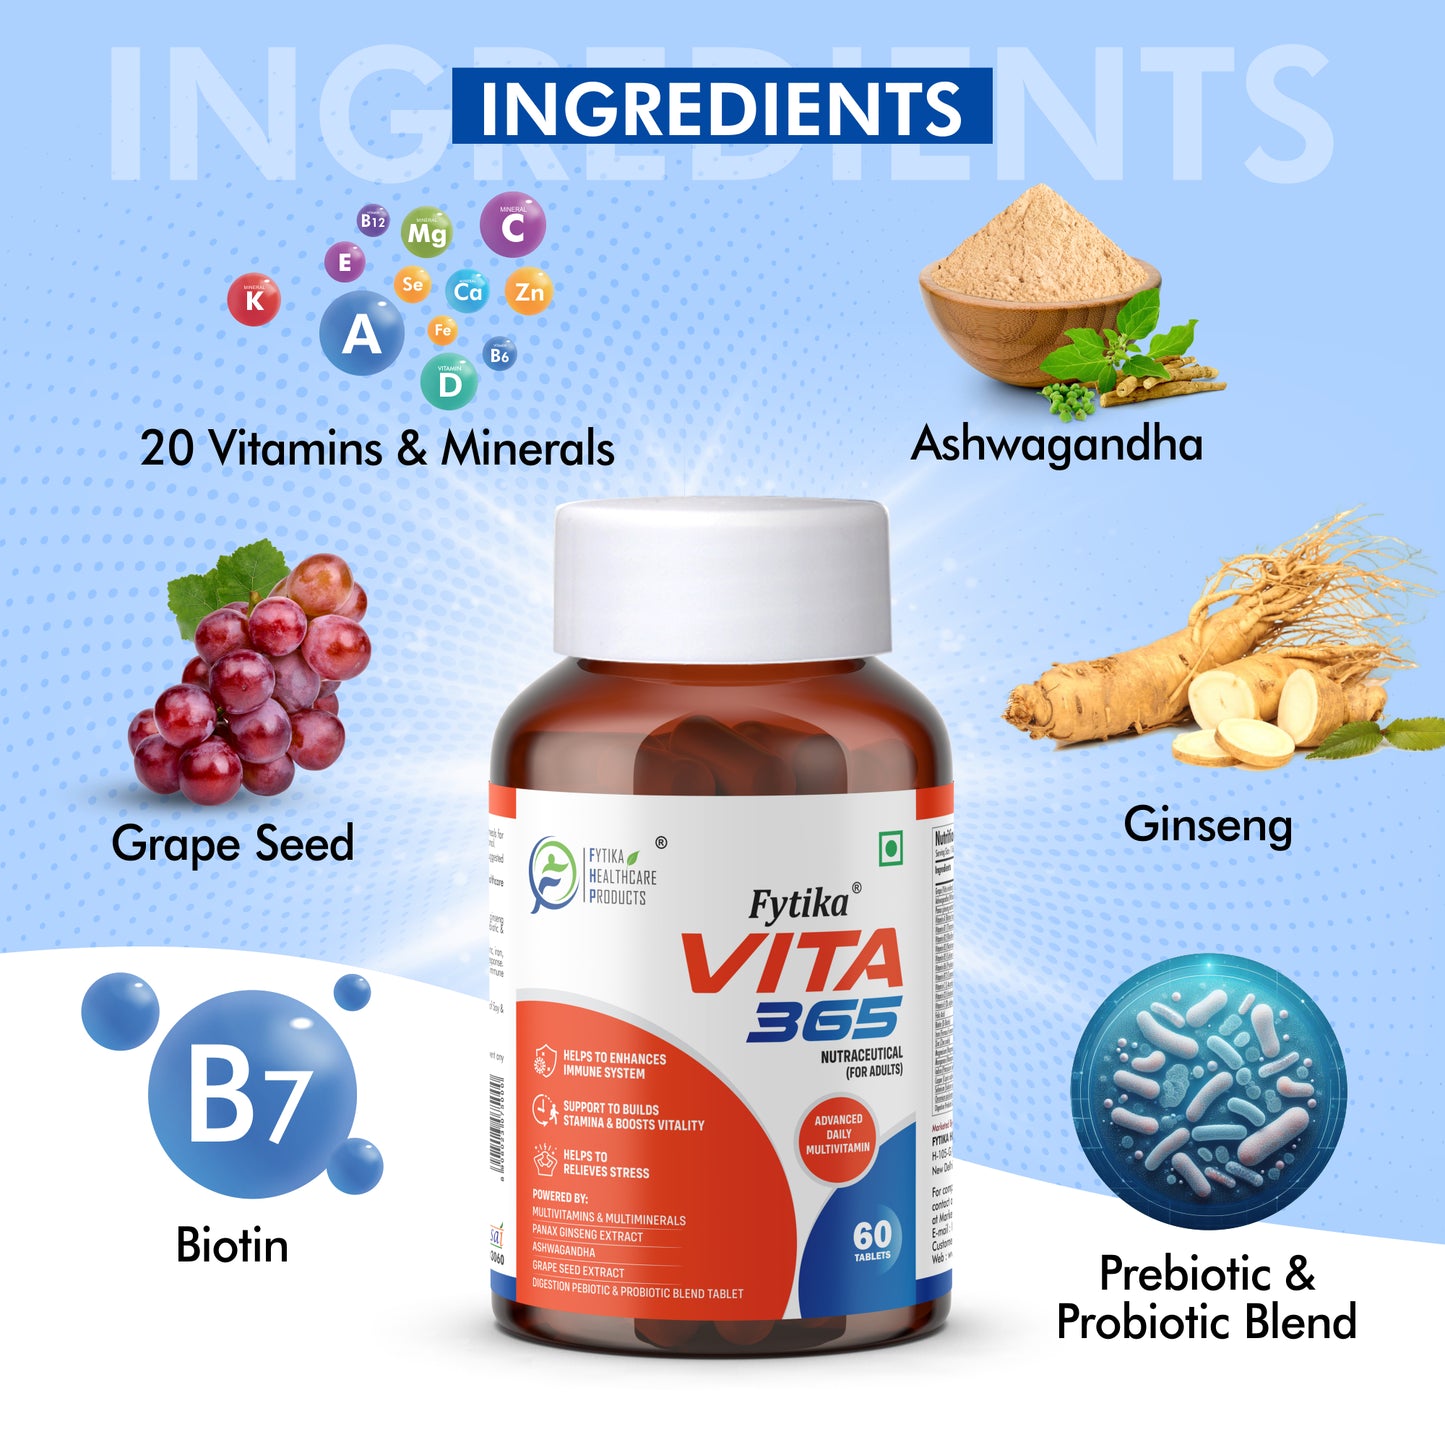 Fytika Vita 365 and Fit Liver: For Immunity, Liver Detoxification, For Men, Women - 60 Tablets Each